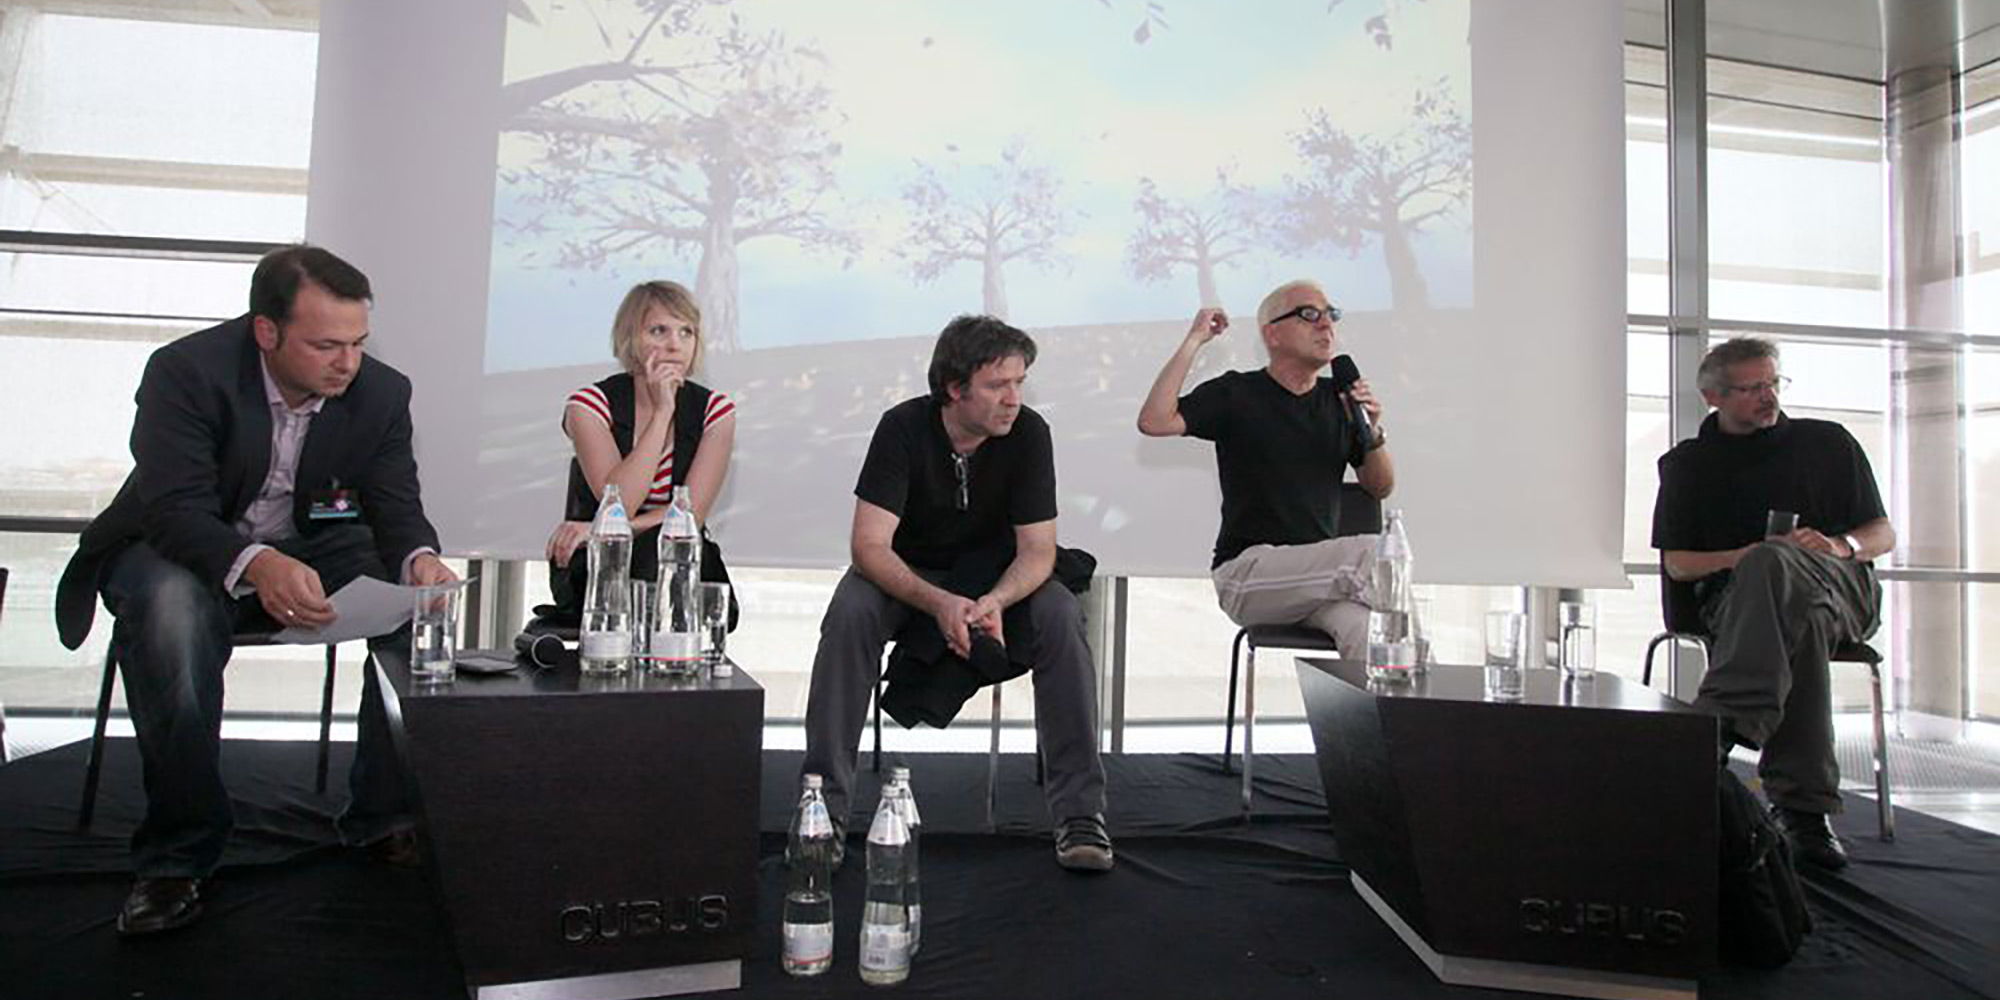 Pixelspaces 2011 – Re-Scripting the Stage: Roland Haring (AT), Martina Mara (AT), Louis-Philippe Demers (CA/SG), Klaus Obermaier (AT) und Johannes Birringer (US/UK) (von links nach rechts).